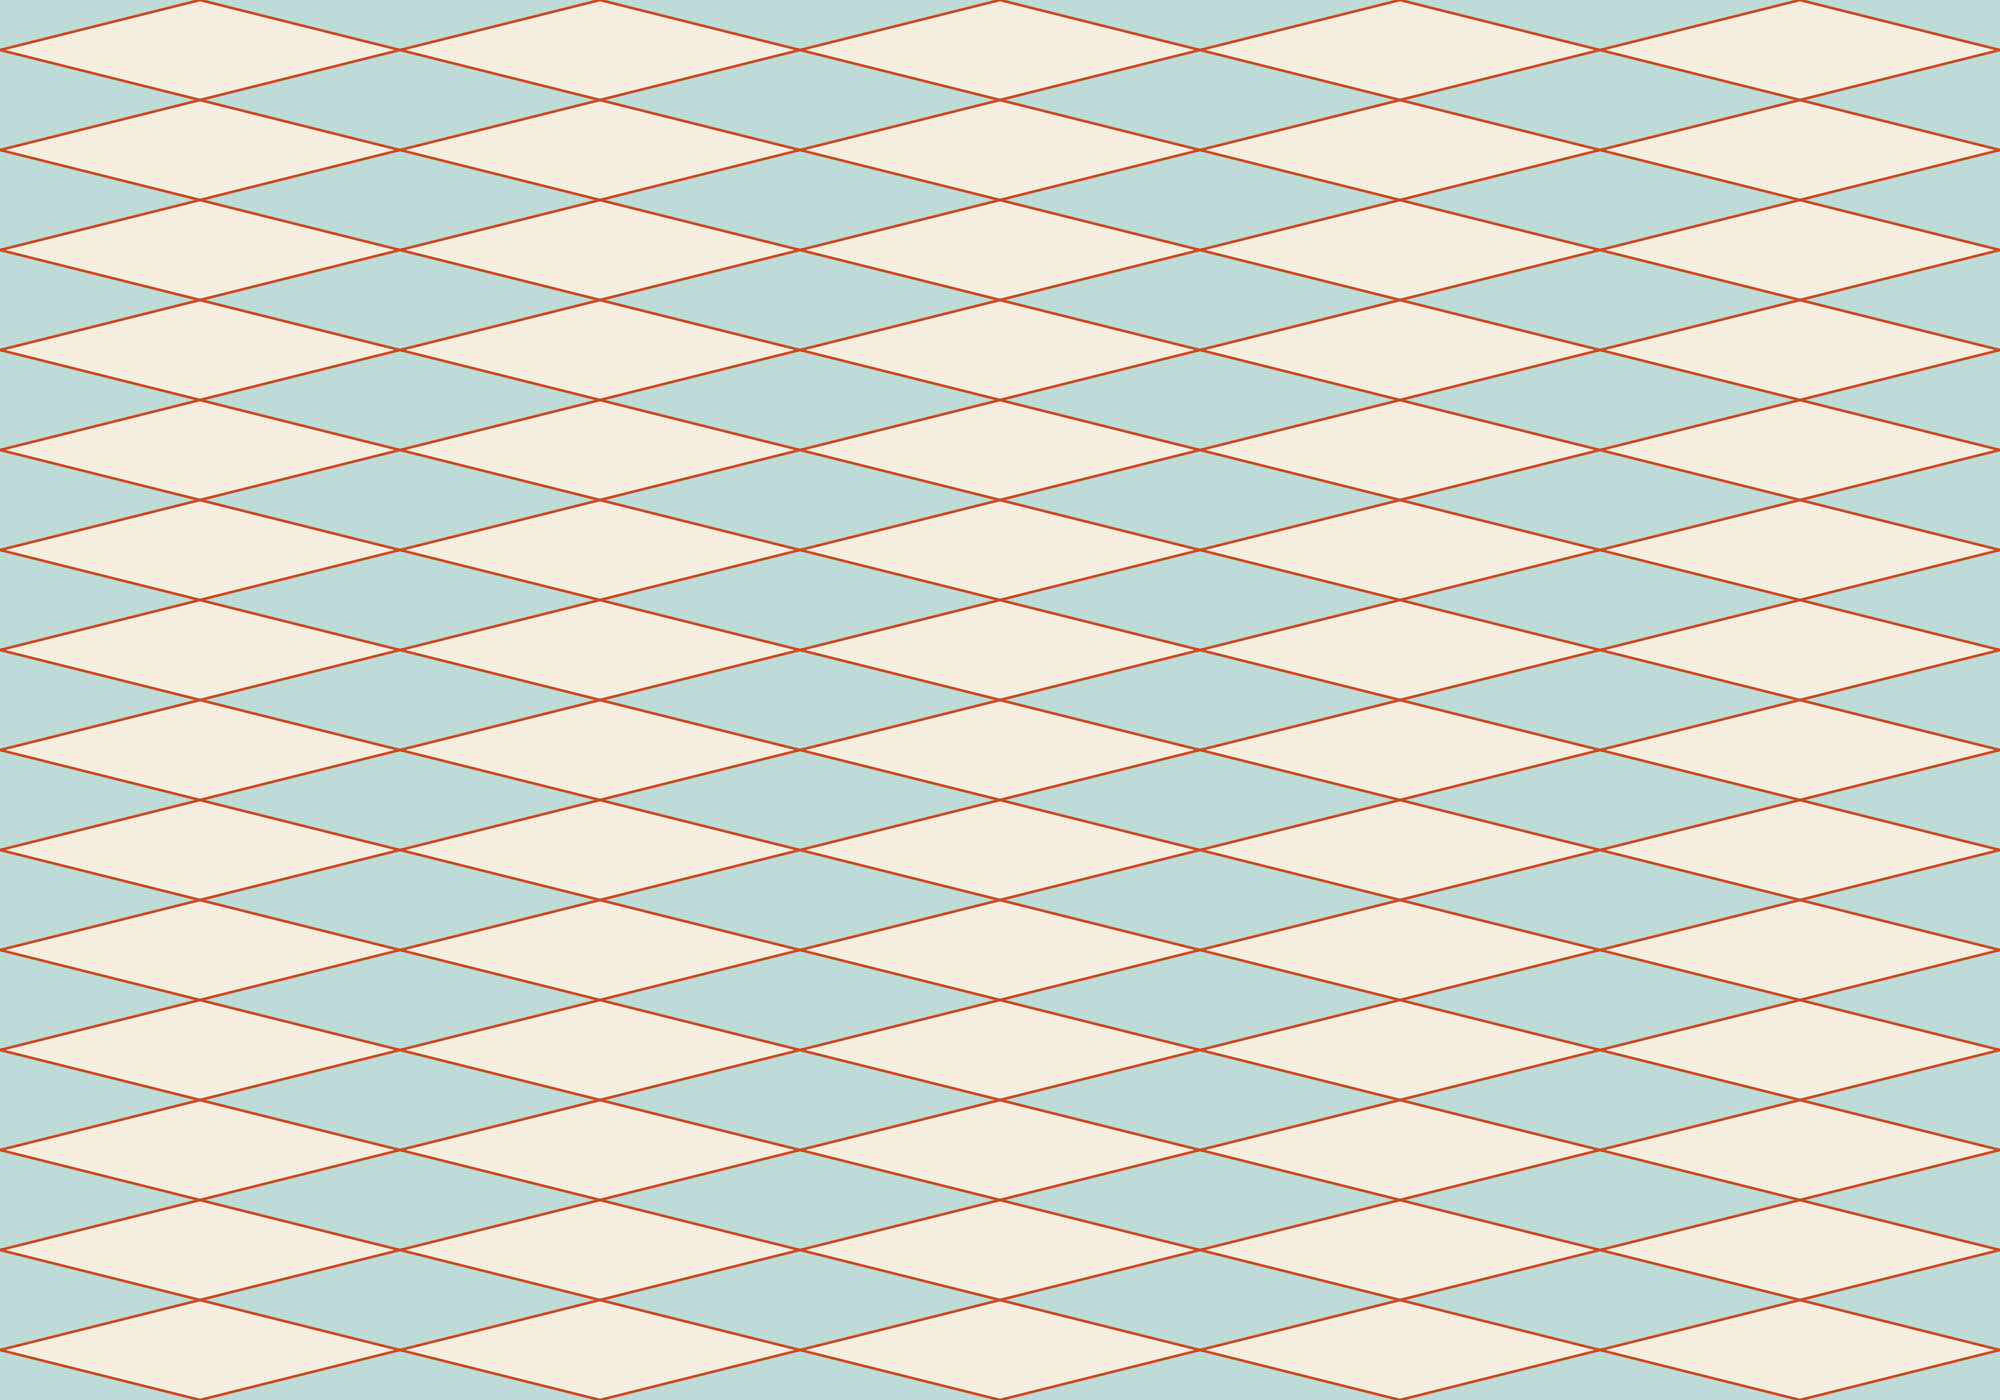             Retro wallpaper with graphic diamond pattern - cream, turquoise, orange | mother-of-pearl smooth fleece
        